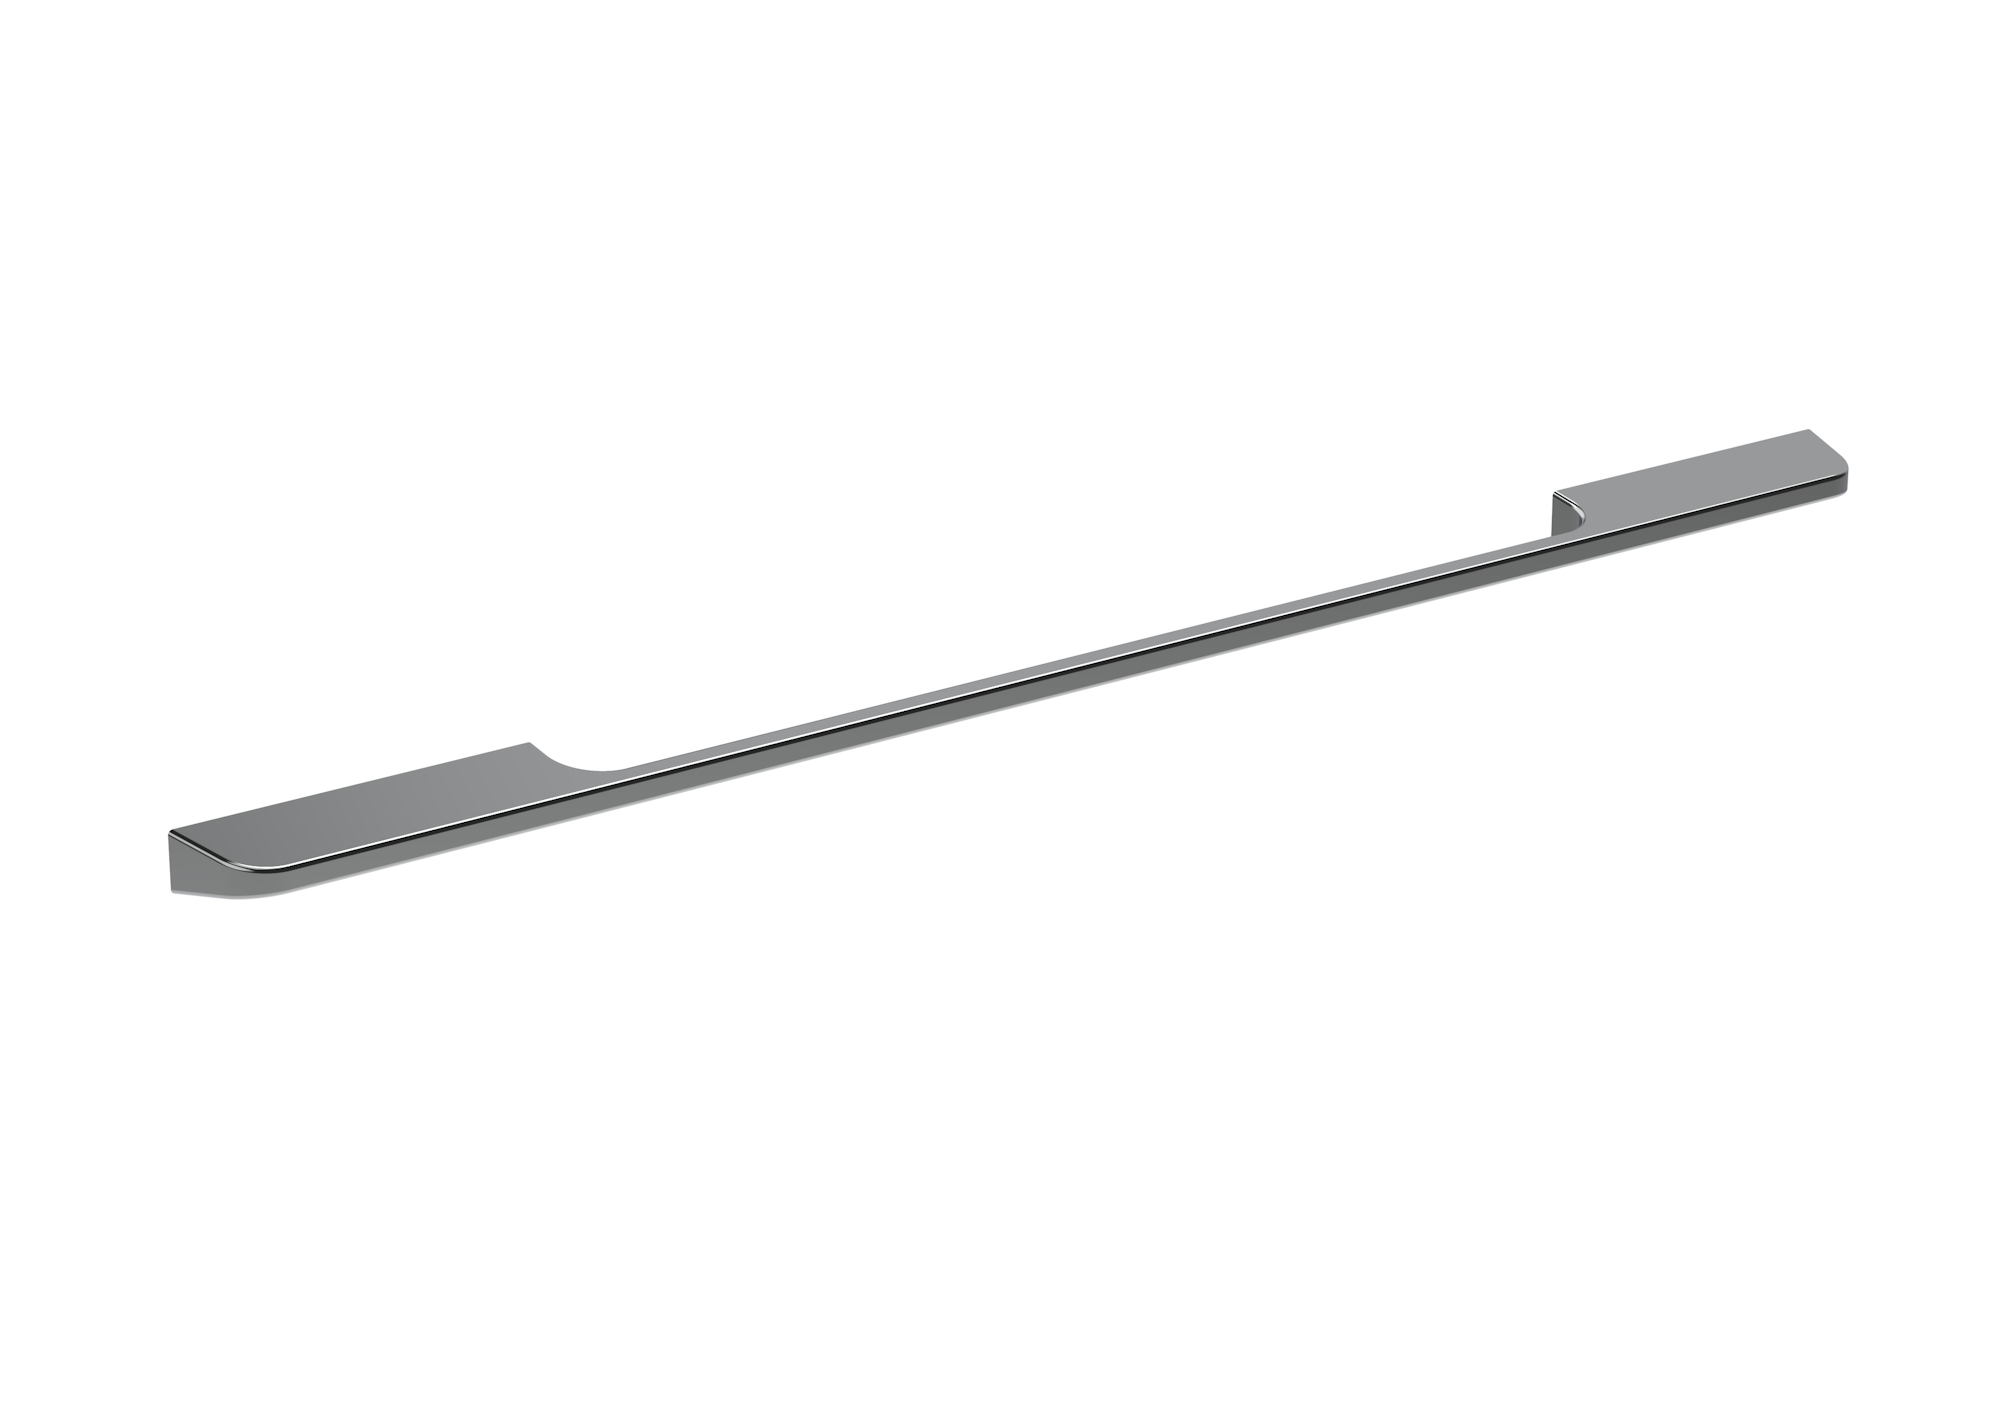 VIENNA 400mm handle - Chrome - 320mm Centres